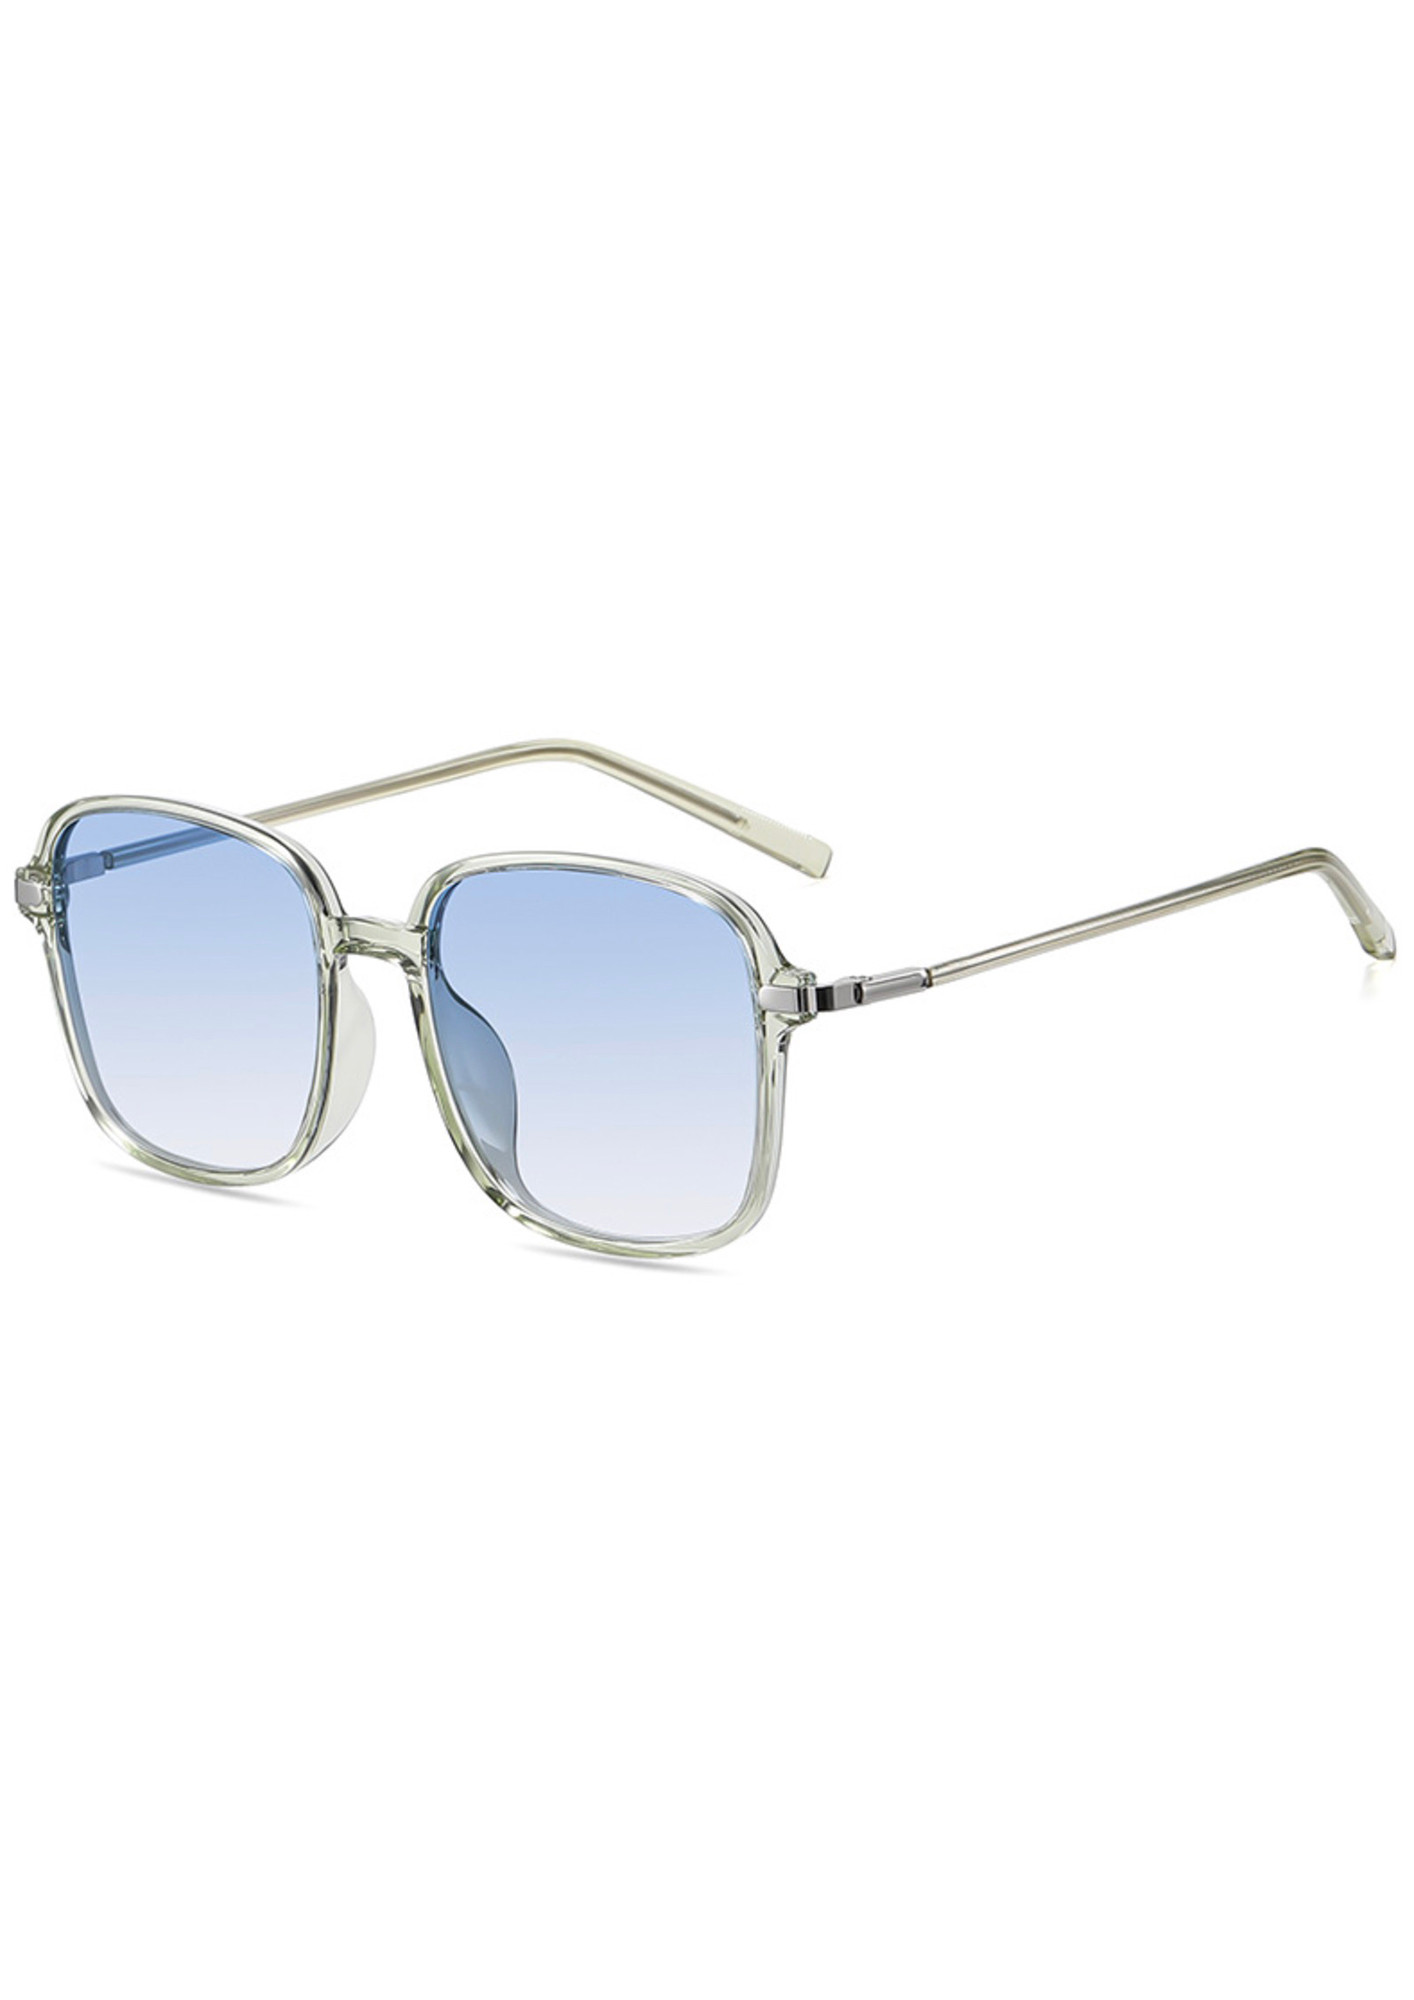 Buy Ray-Ban Erika Metal Frame Sunglasses from Next India